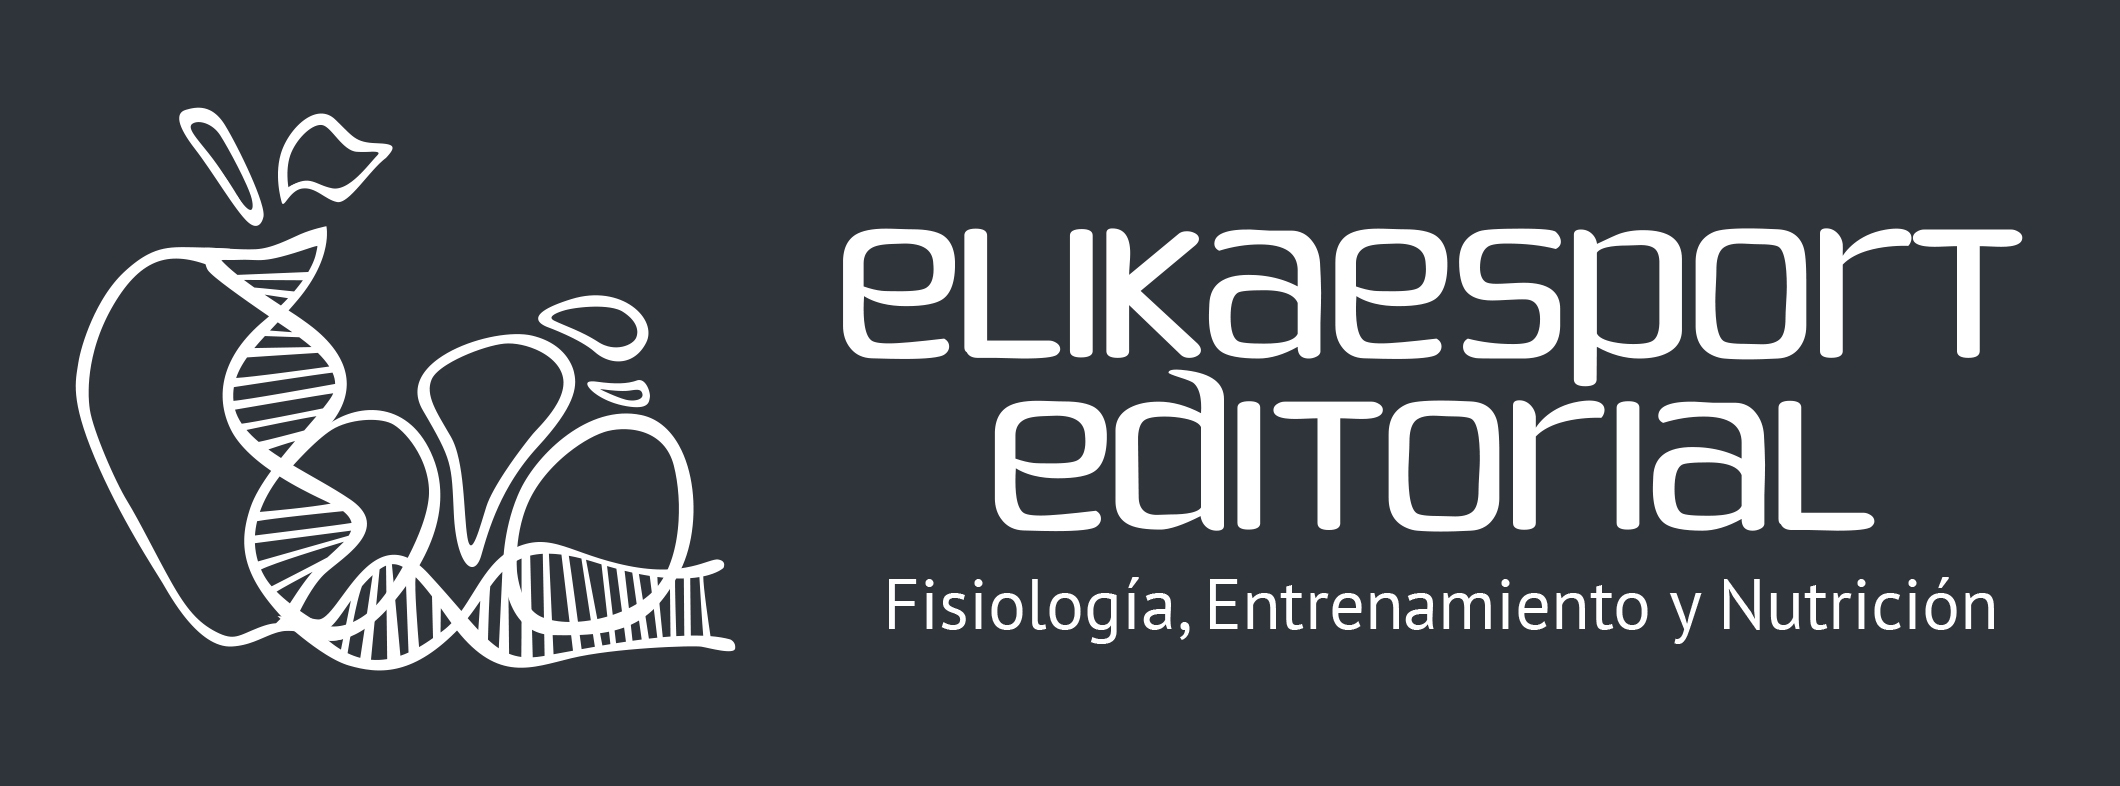 Elikaesport Editorial